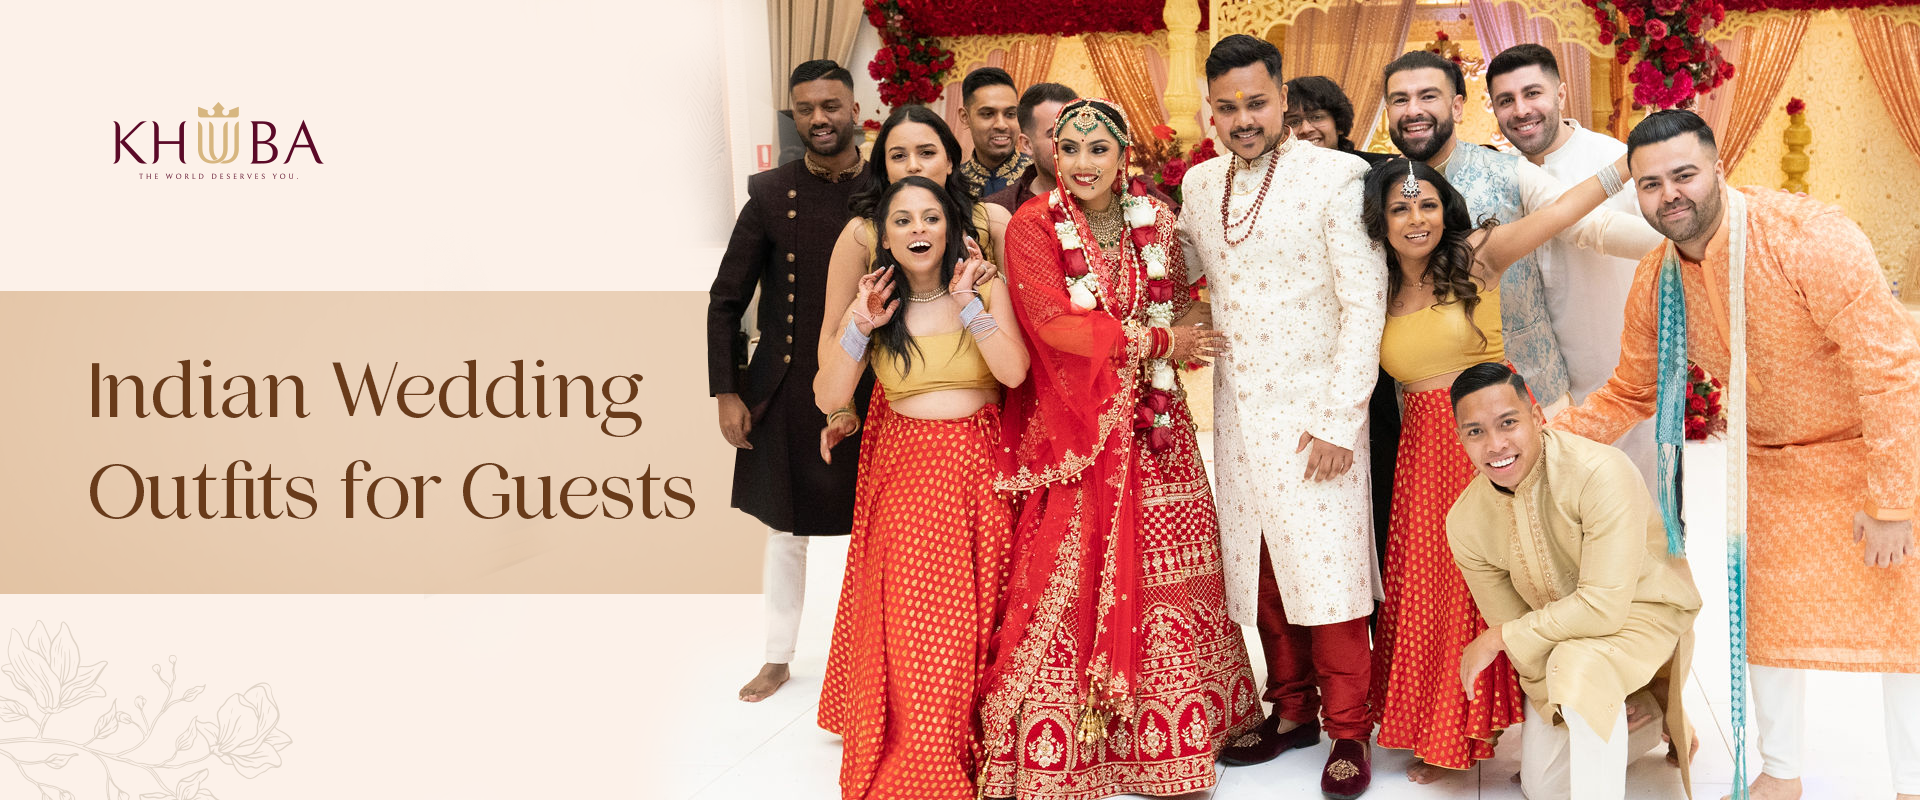 21 Best Reception Dress For Indian Brides